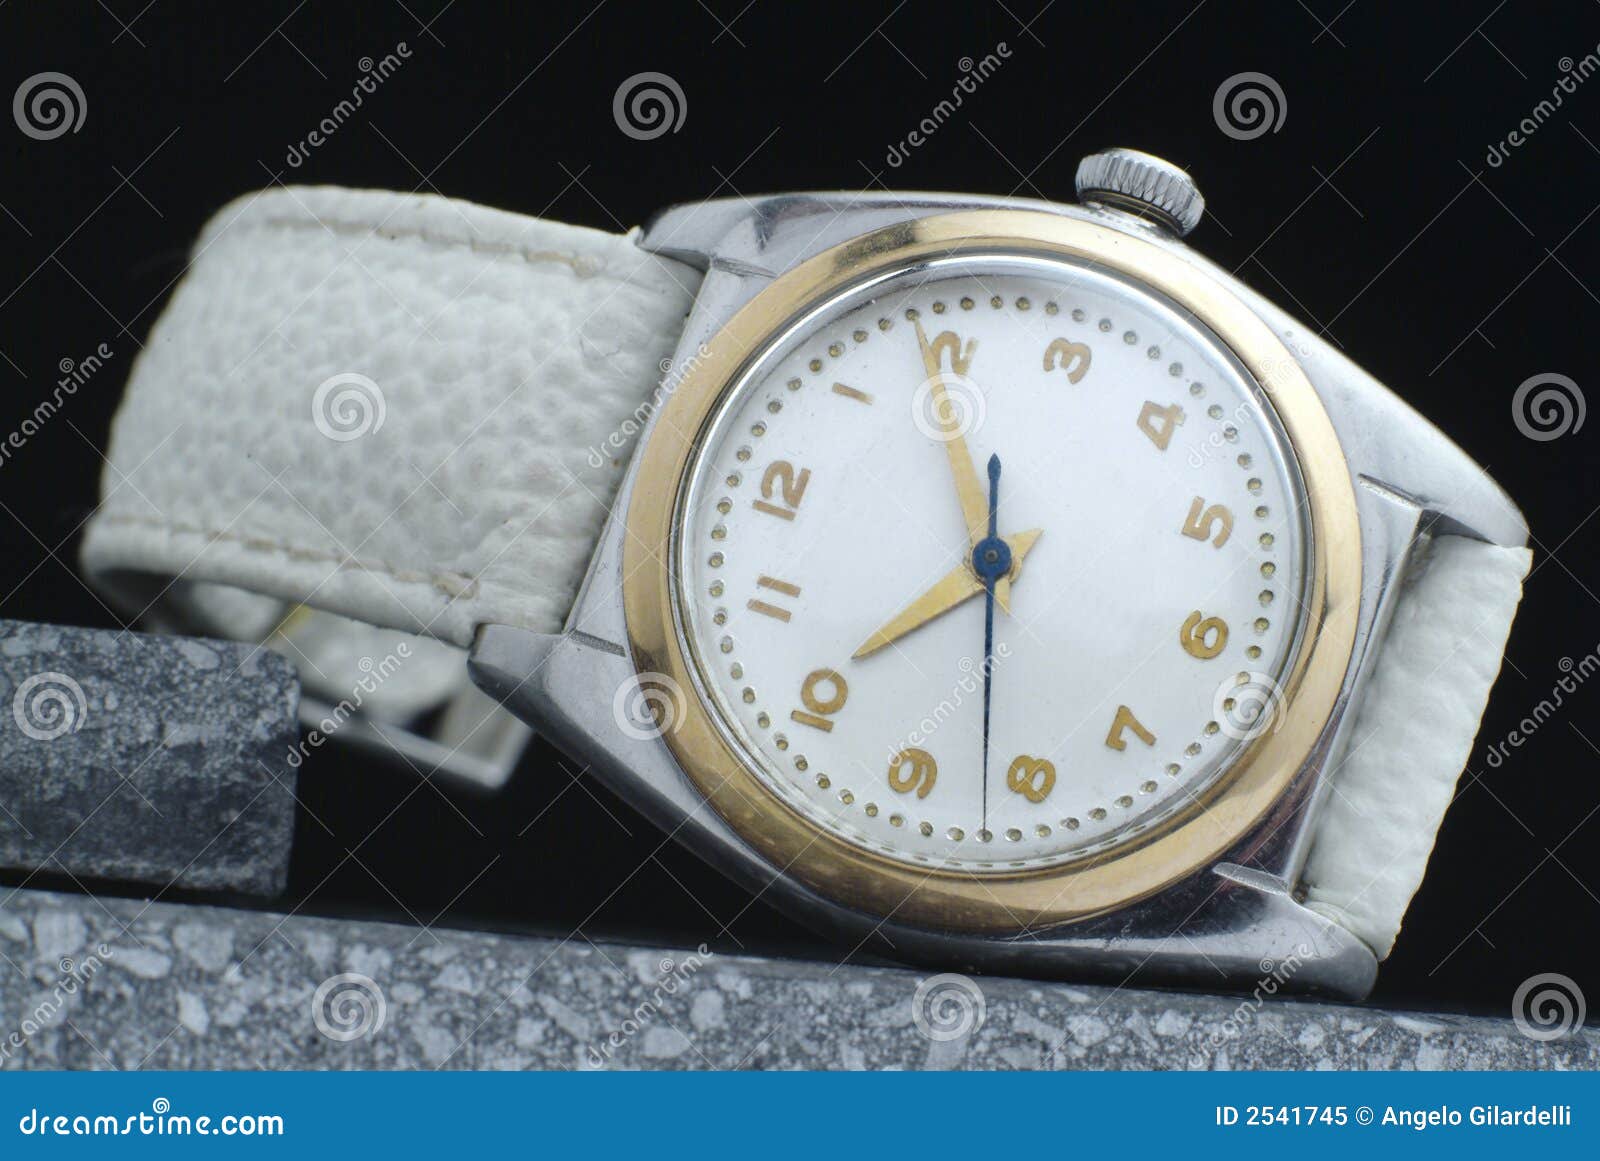 Wrist watch stock image. Image of wristwatch, vintage - 2541745